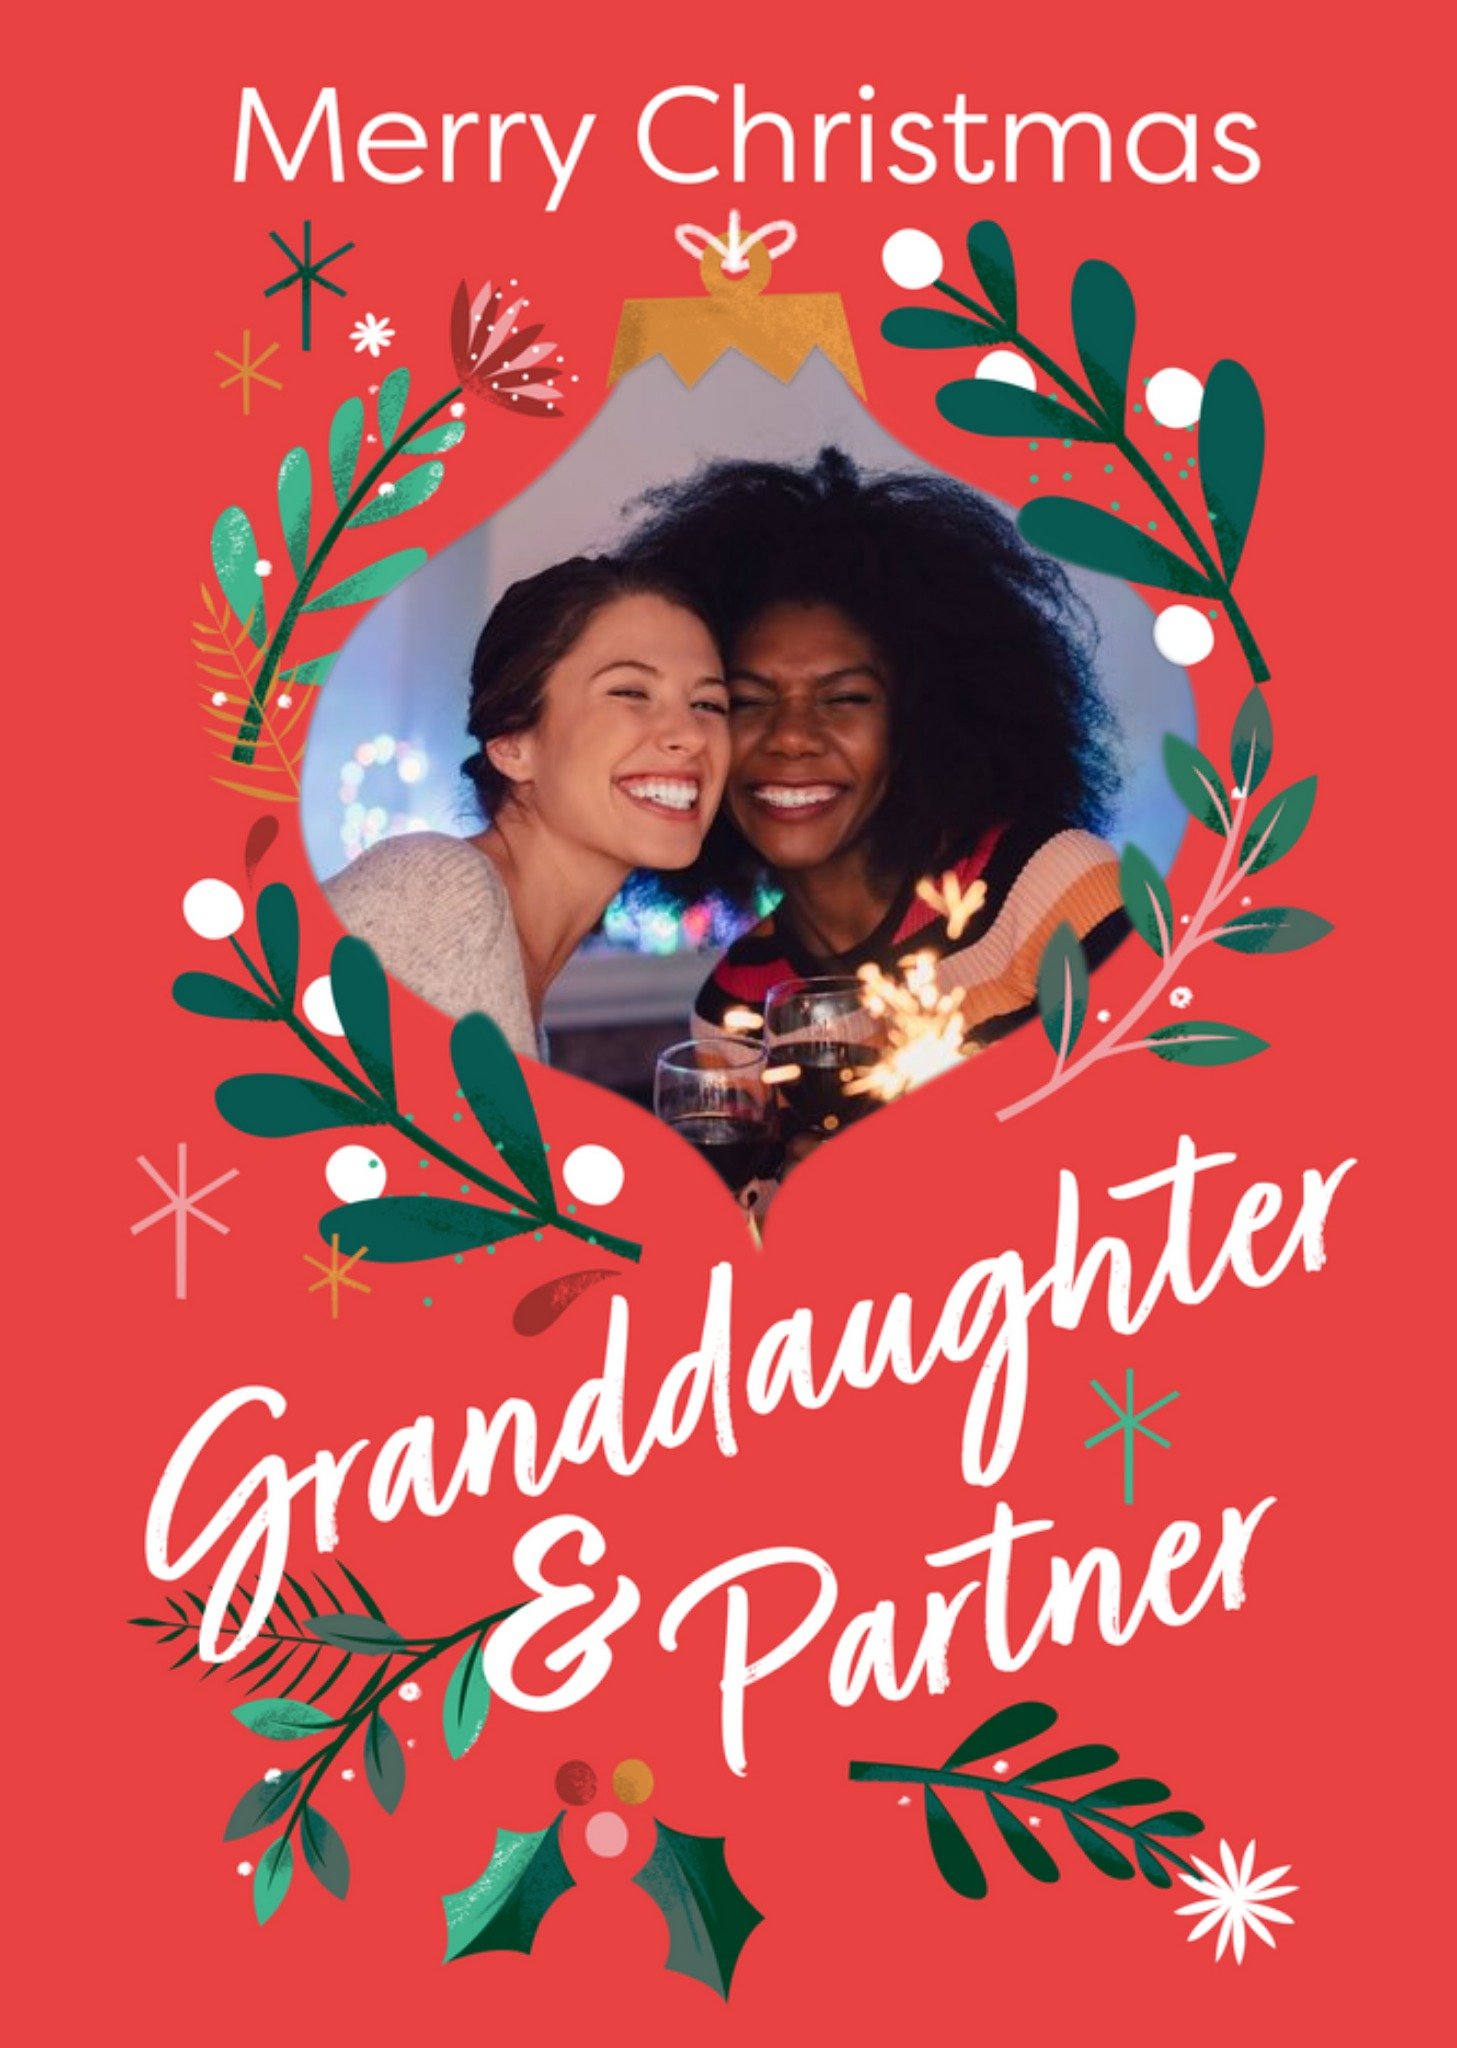 Moonpig Retro Festive Bauble Photo Upload Granddaughter And Partner Christmas Card, Large